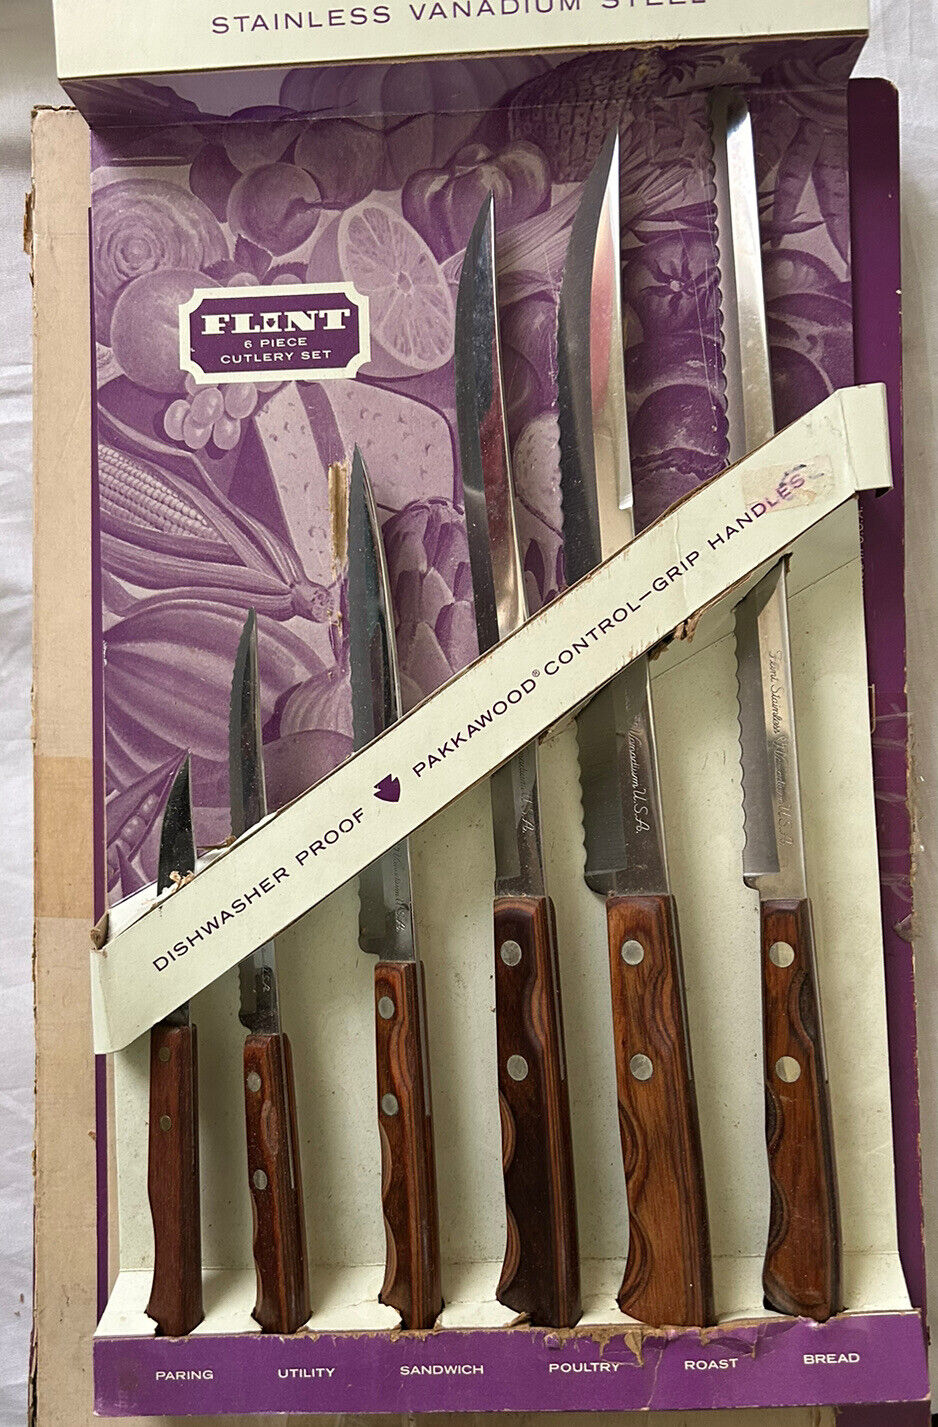 Vintage EKCO Flint 6 piece Cutlery Set Stainless Vanadium USA Kitchen Knife Set